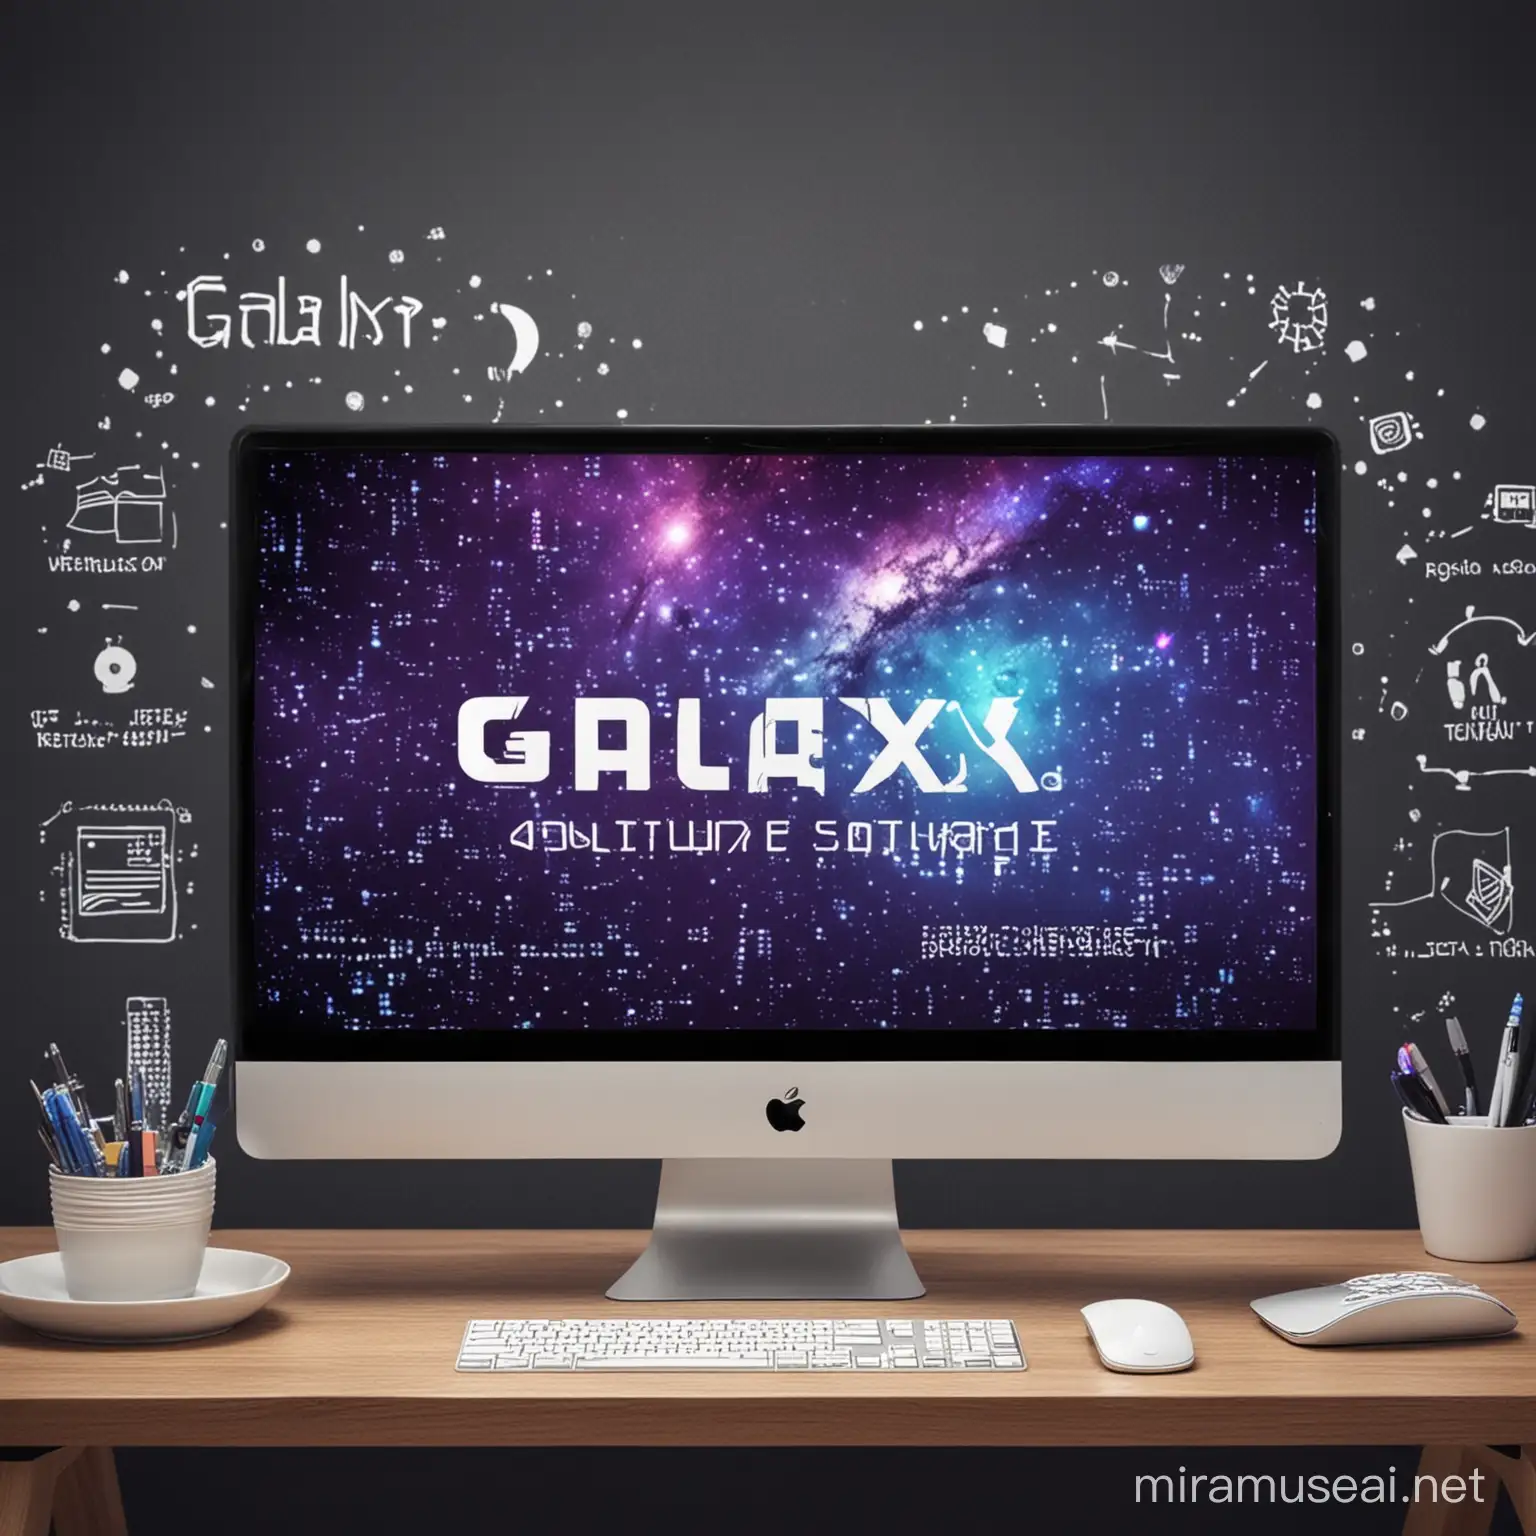 Galaxy software development